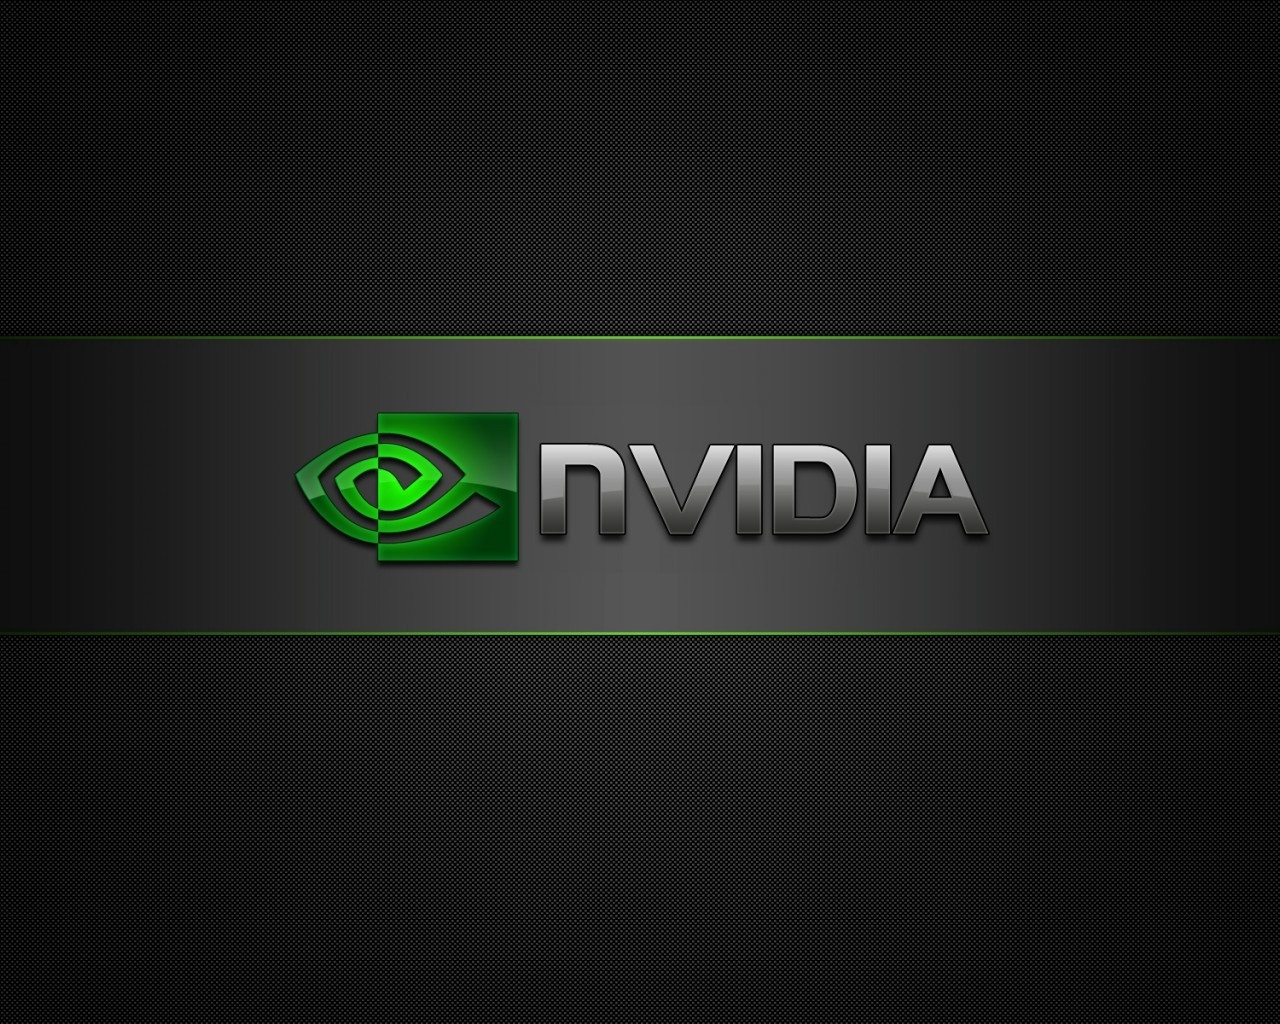 Nvidia Minimalistic for 1280 x 1024 resolution